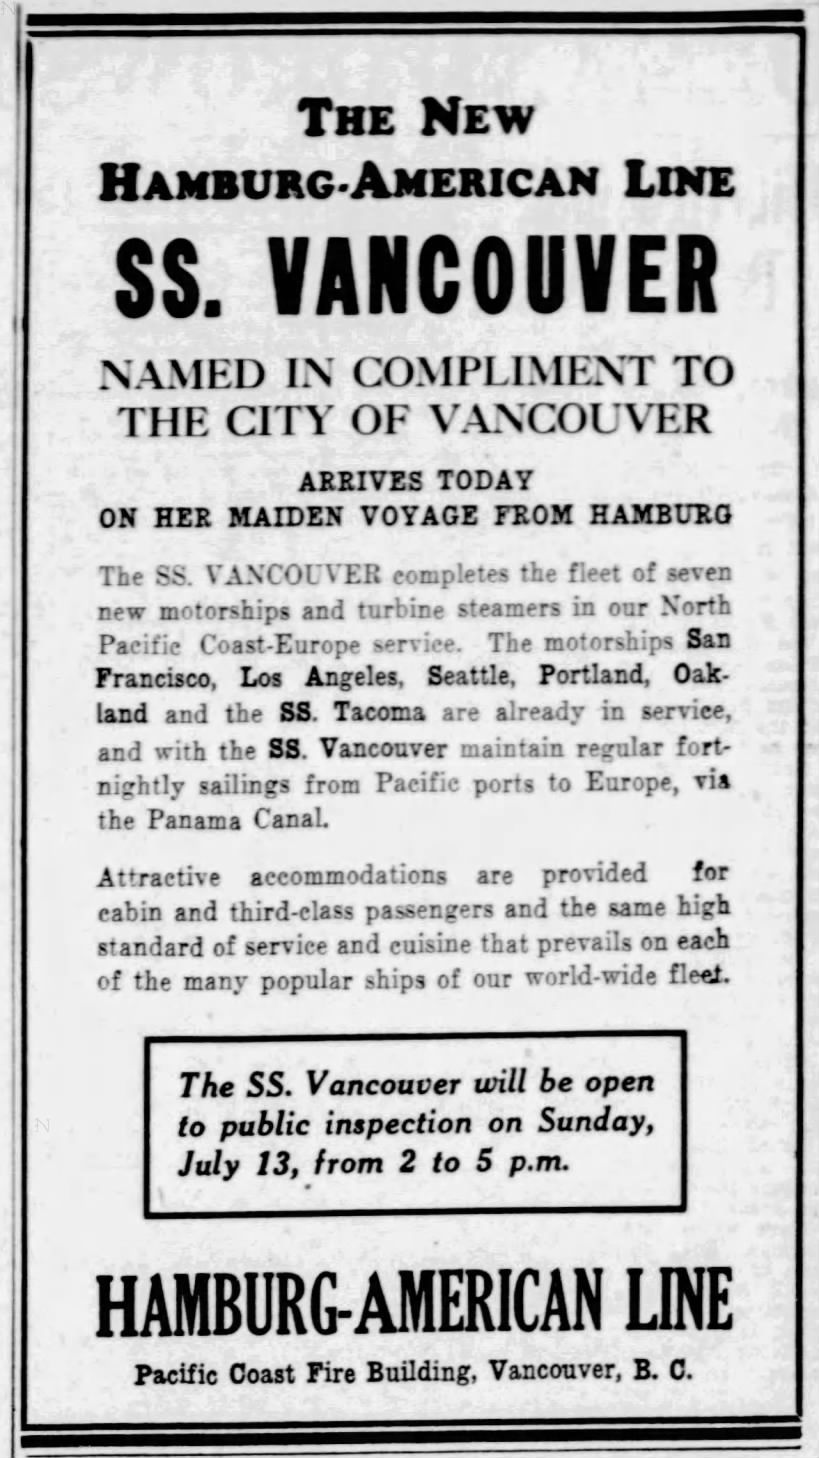 SS Vancouver - new Hamburg-American Line